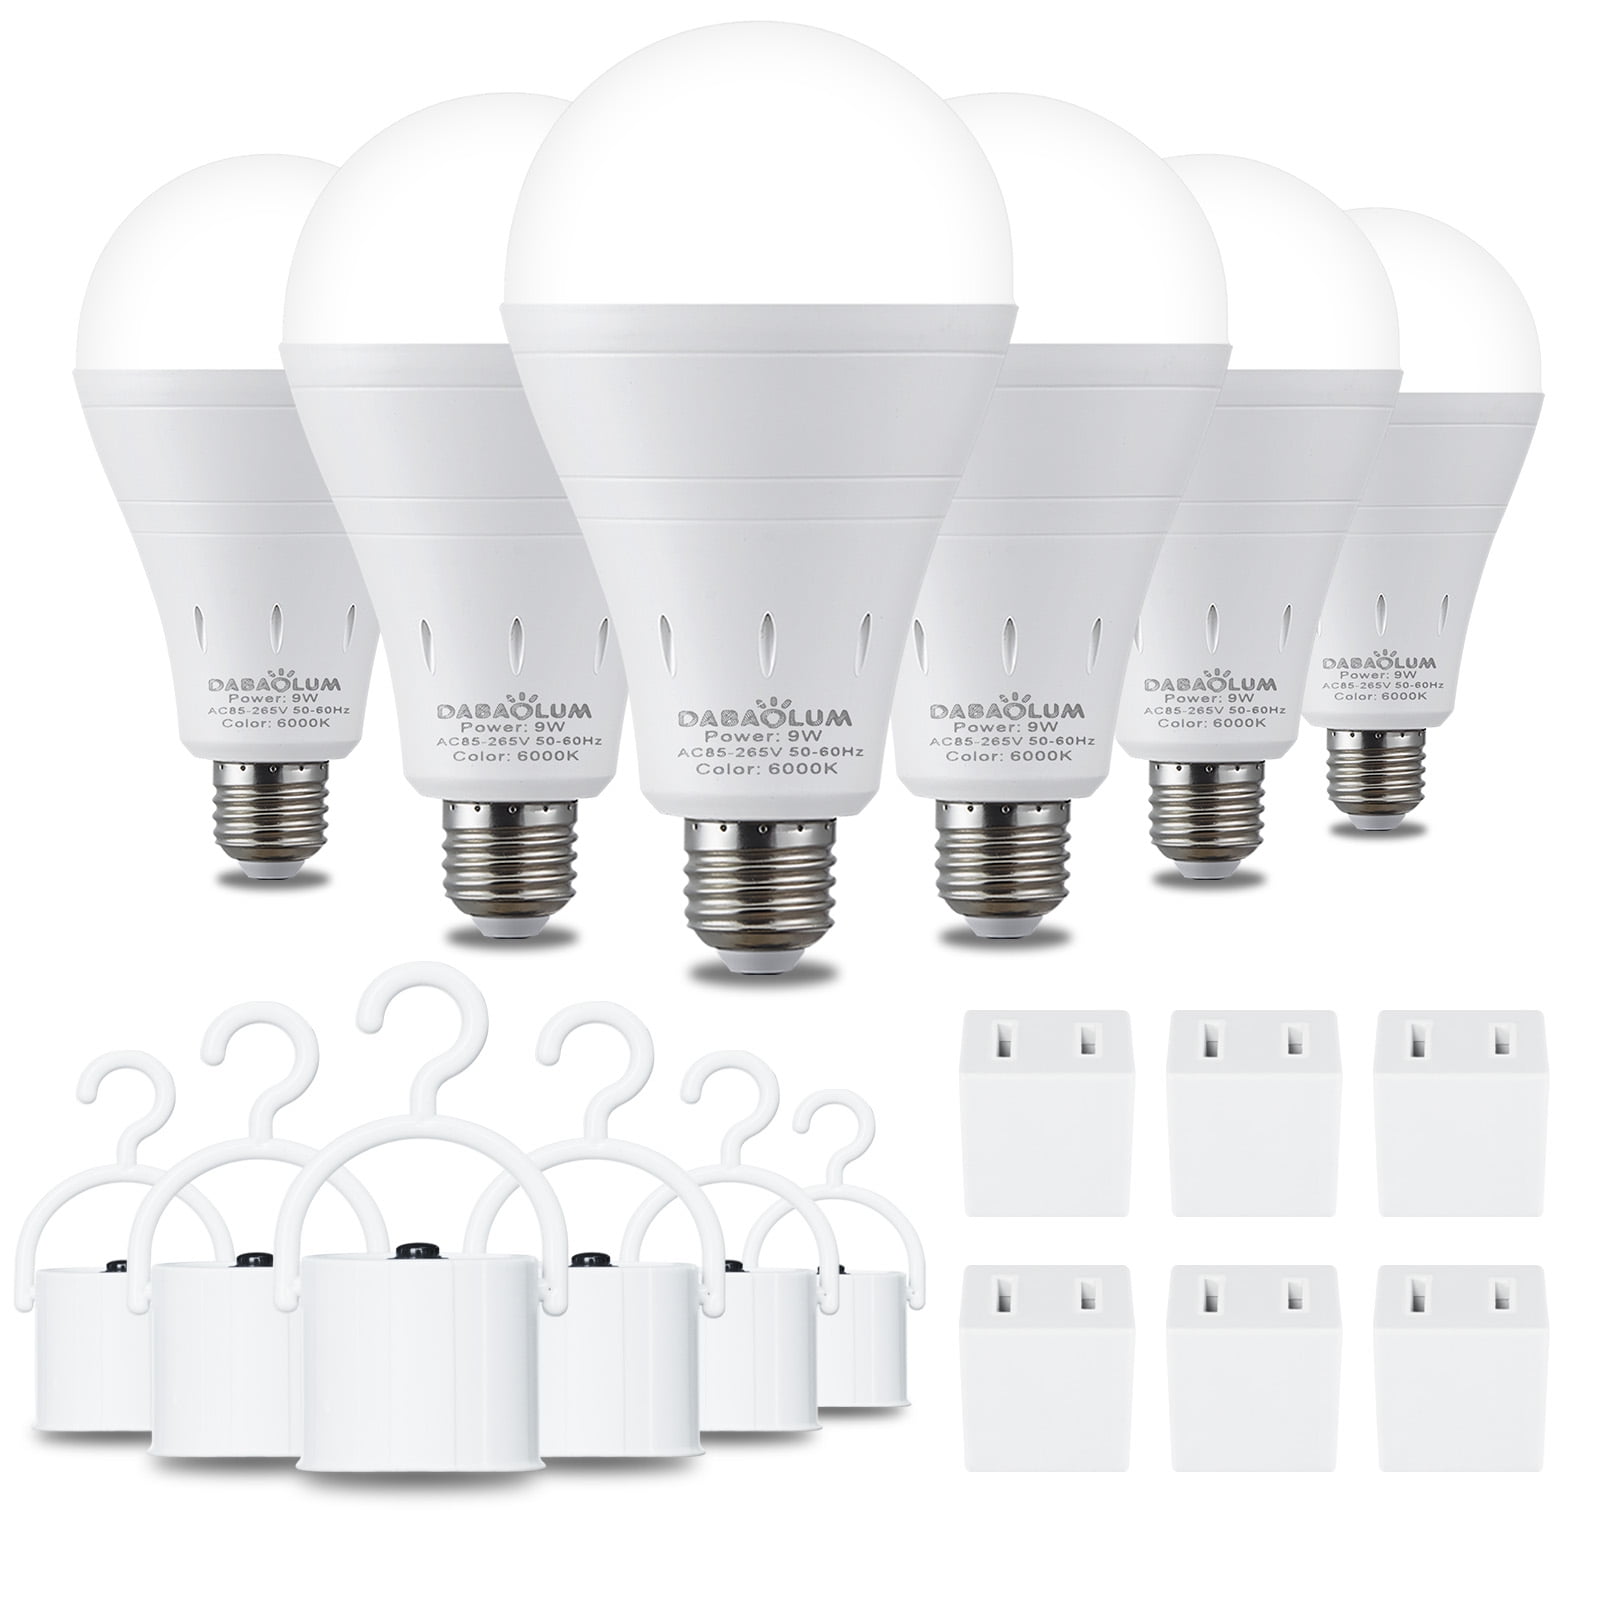 UNILAMP 9W Rechargeable Emergency Light Bulbs, E26 Battery Light